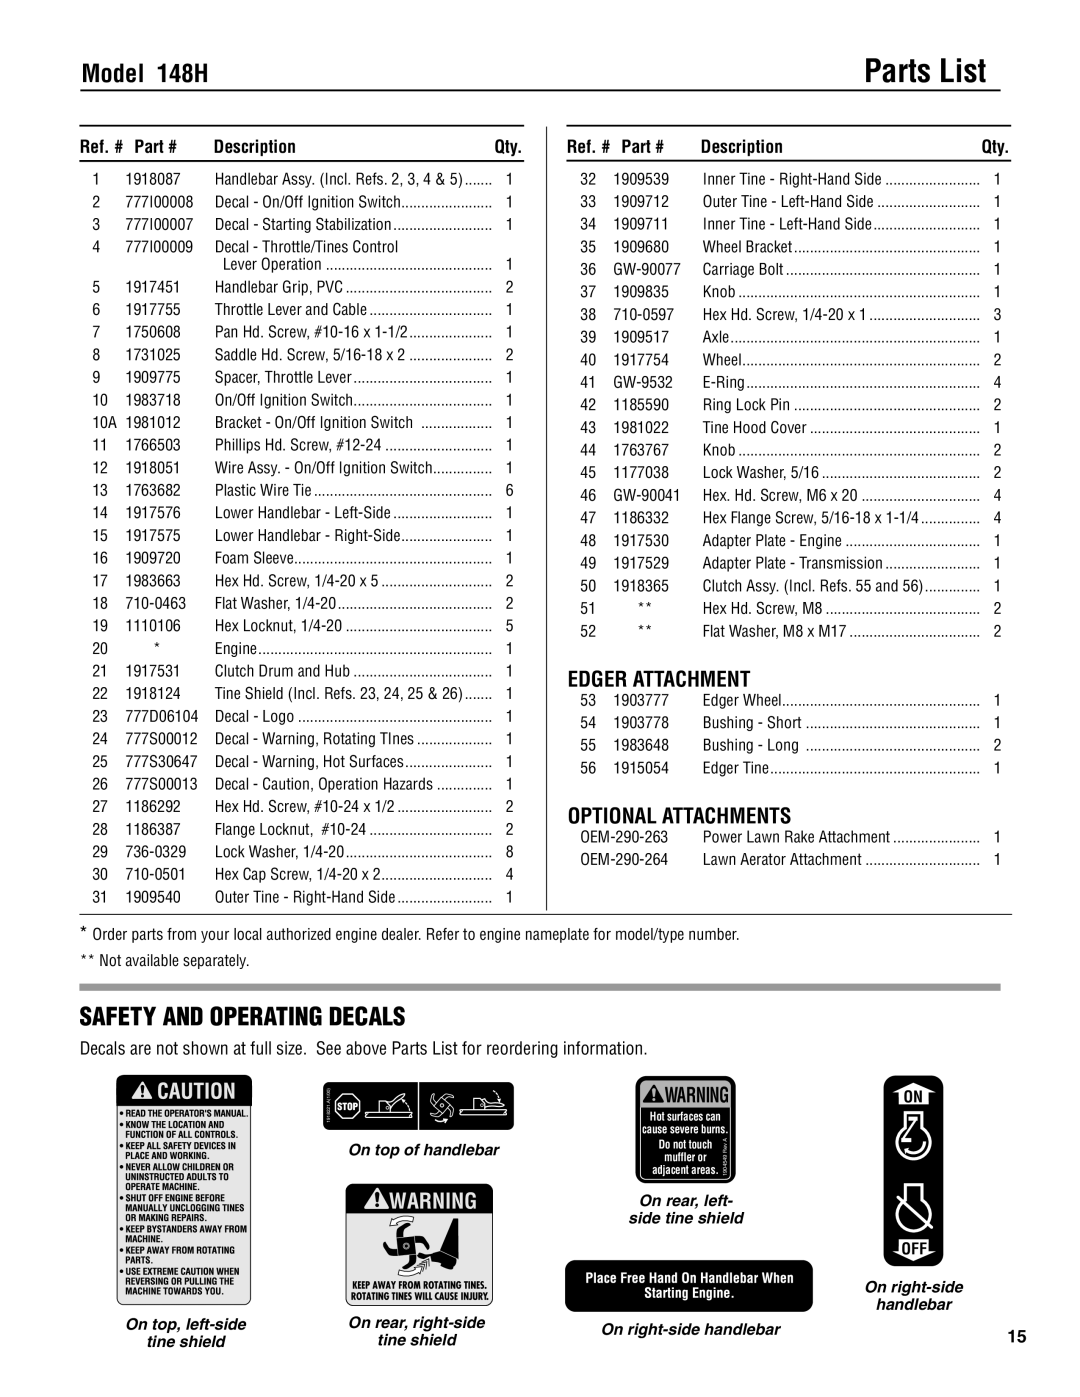 Troy-Bilt Safety And Operating Decals, Edger Attachment, Optional Attachments, Parts List, Model 148H, Description 